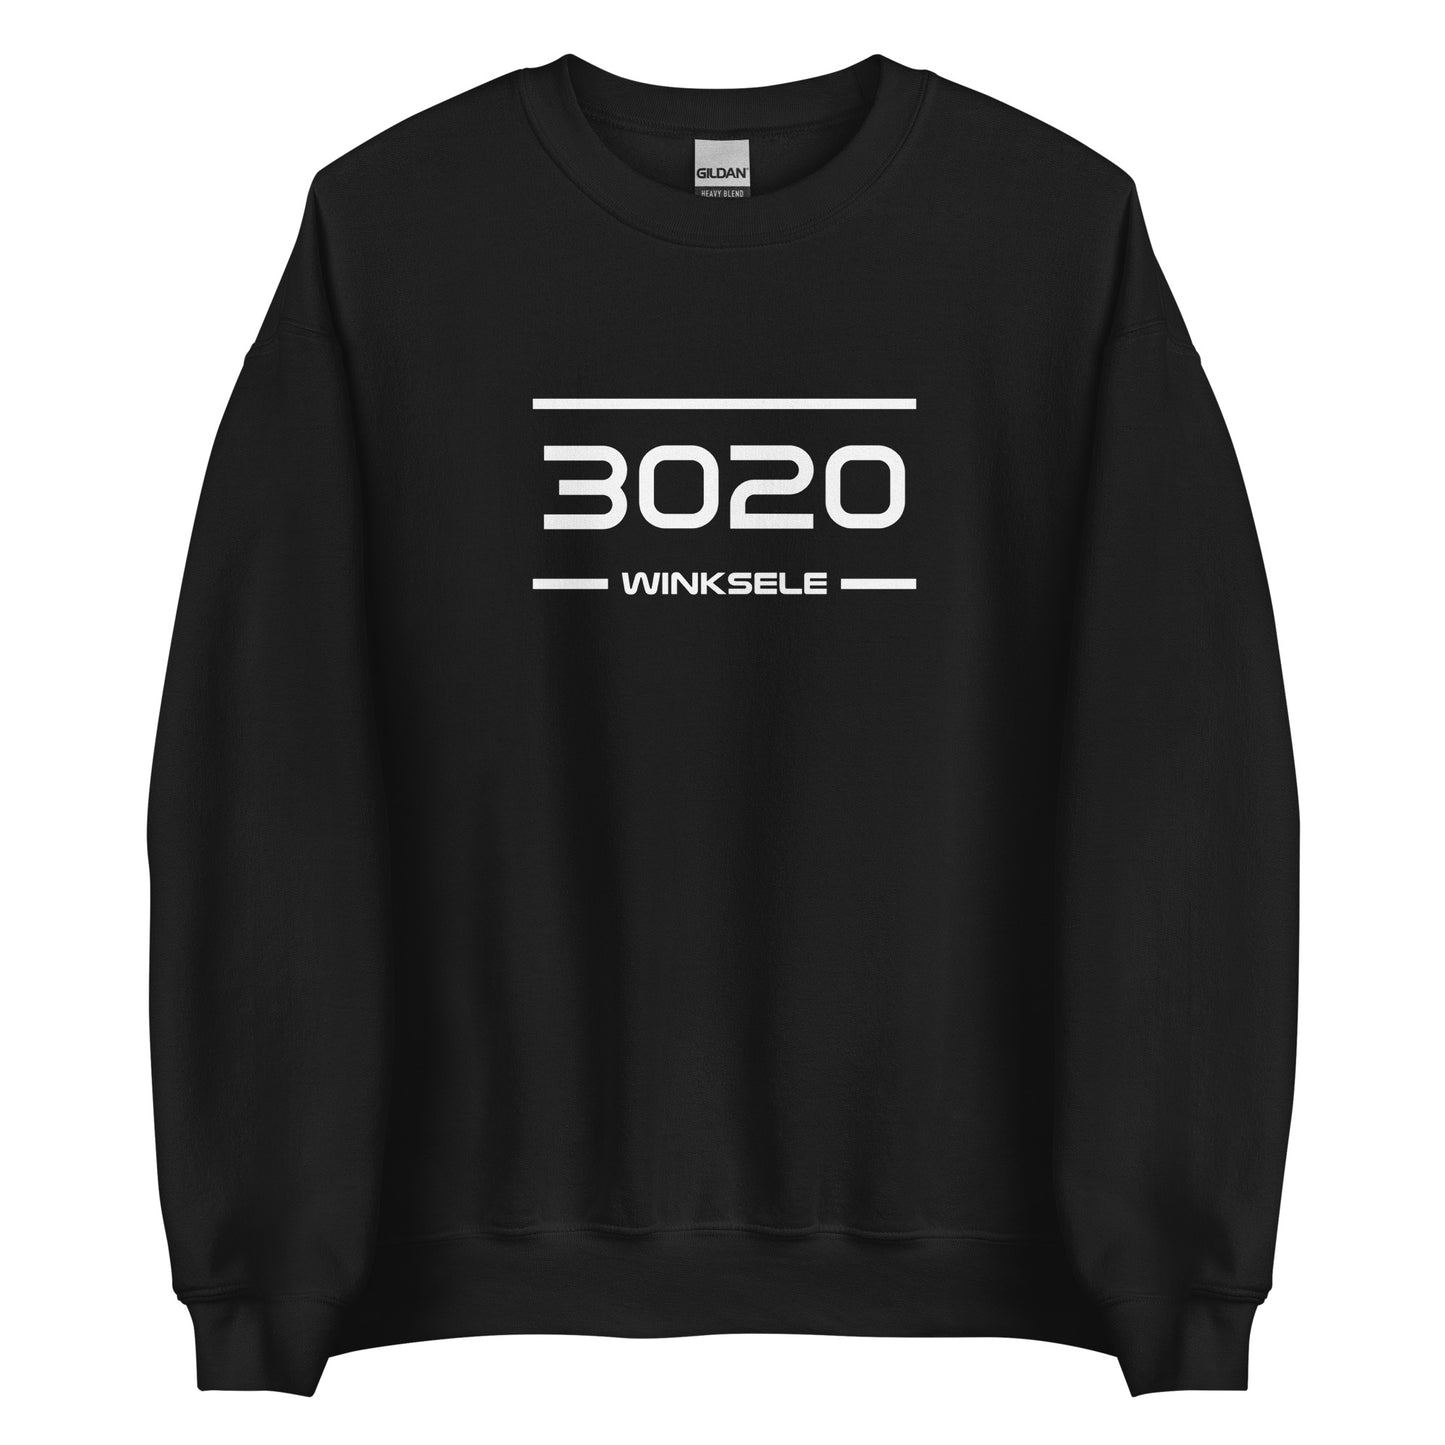 Sweater - 3020 - Winksele (M/V)